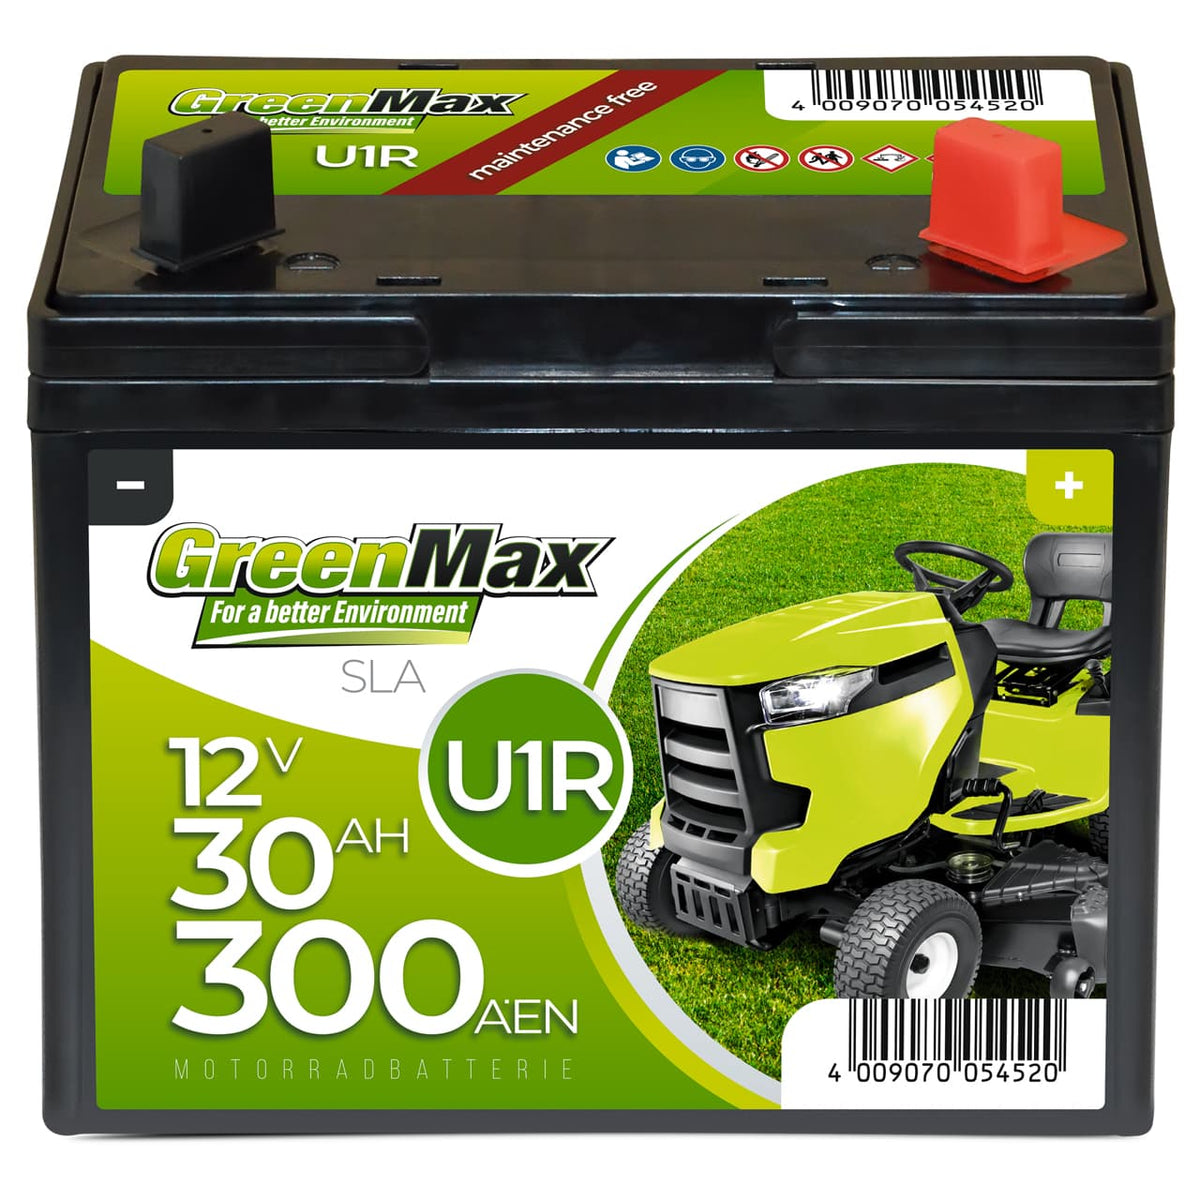 GreenMax U1R 12V 30Ah 300A/EN